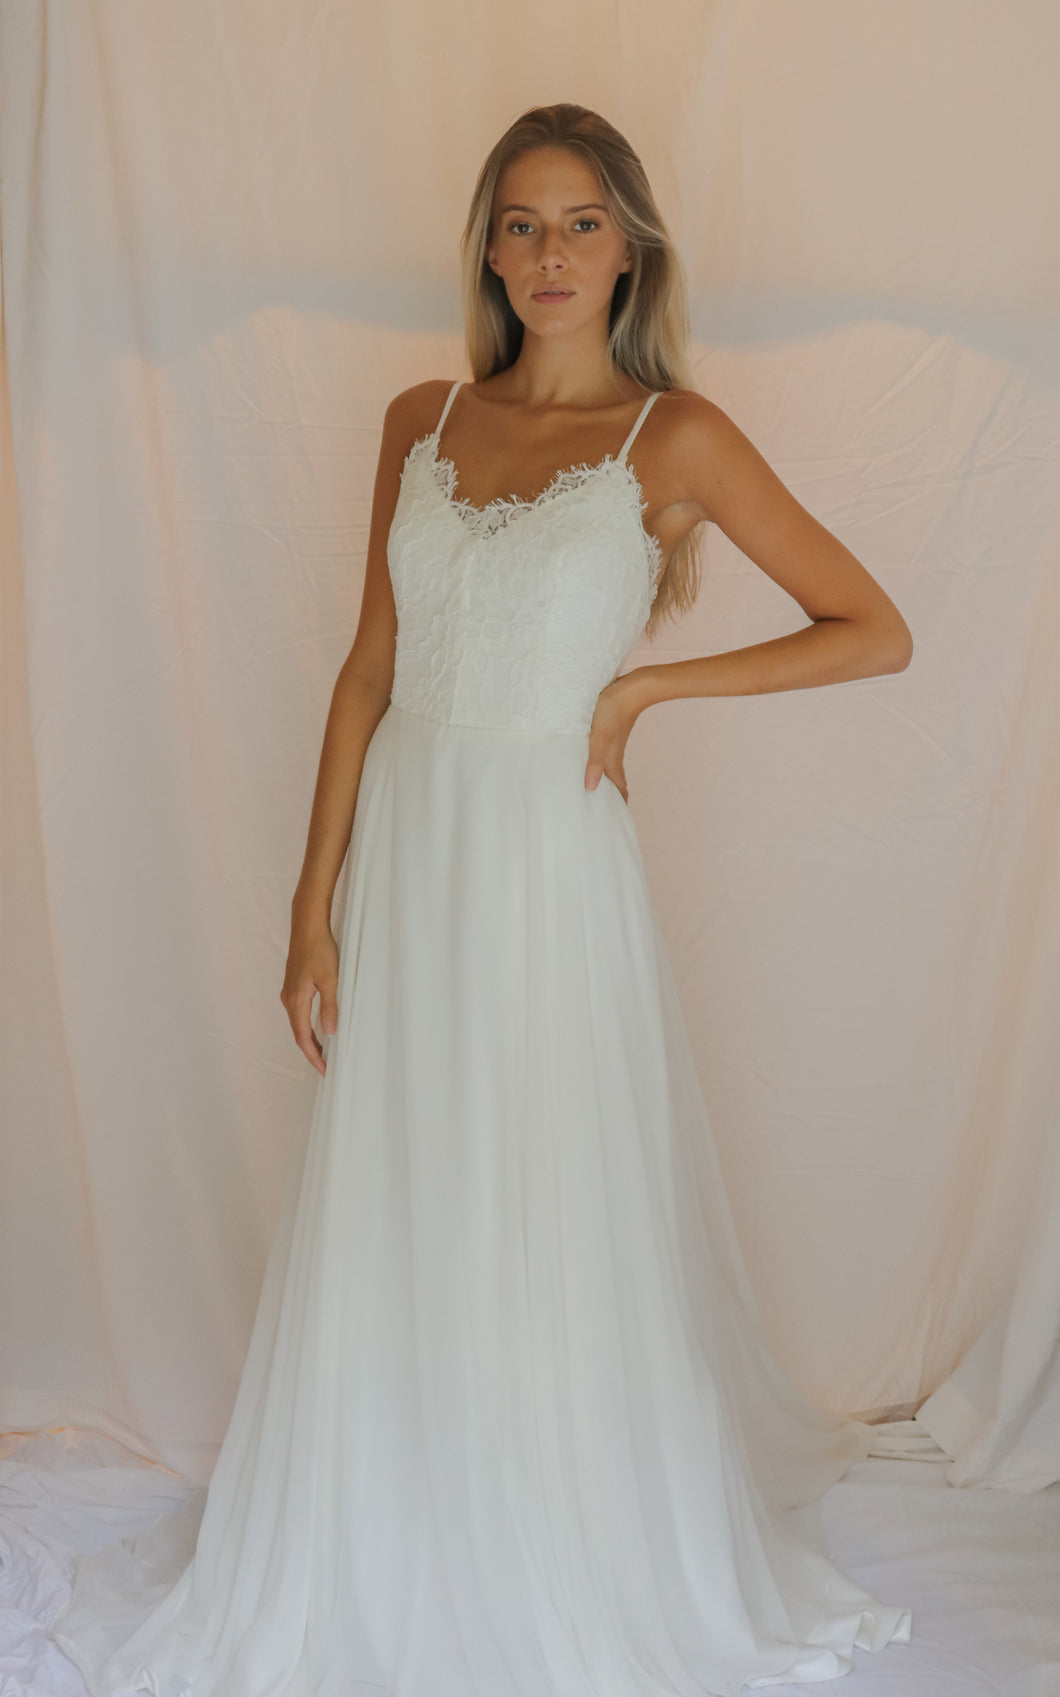 amy kuschel 'Amy Kuschel Design' wedding dress size-00 NEW